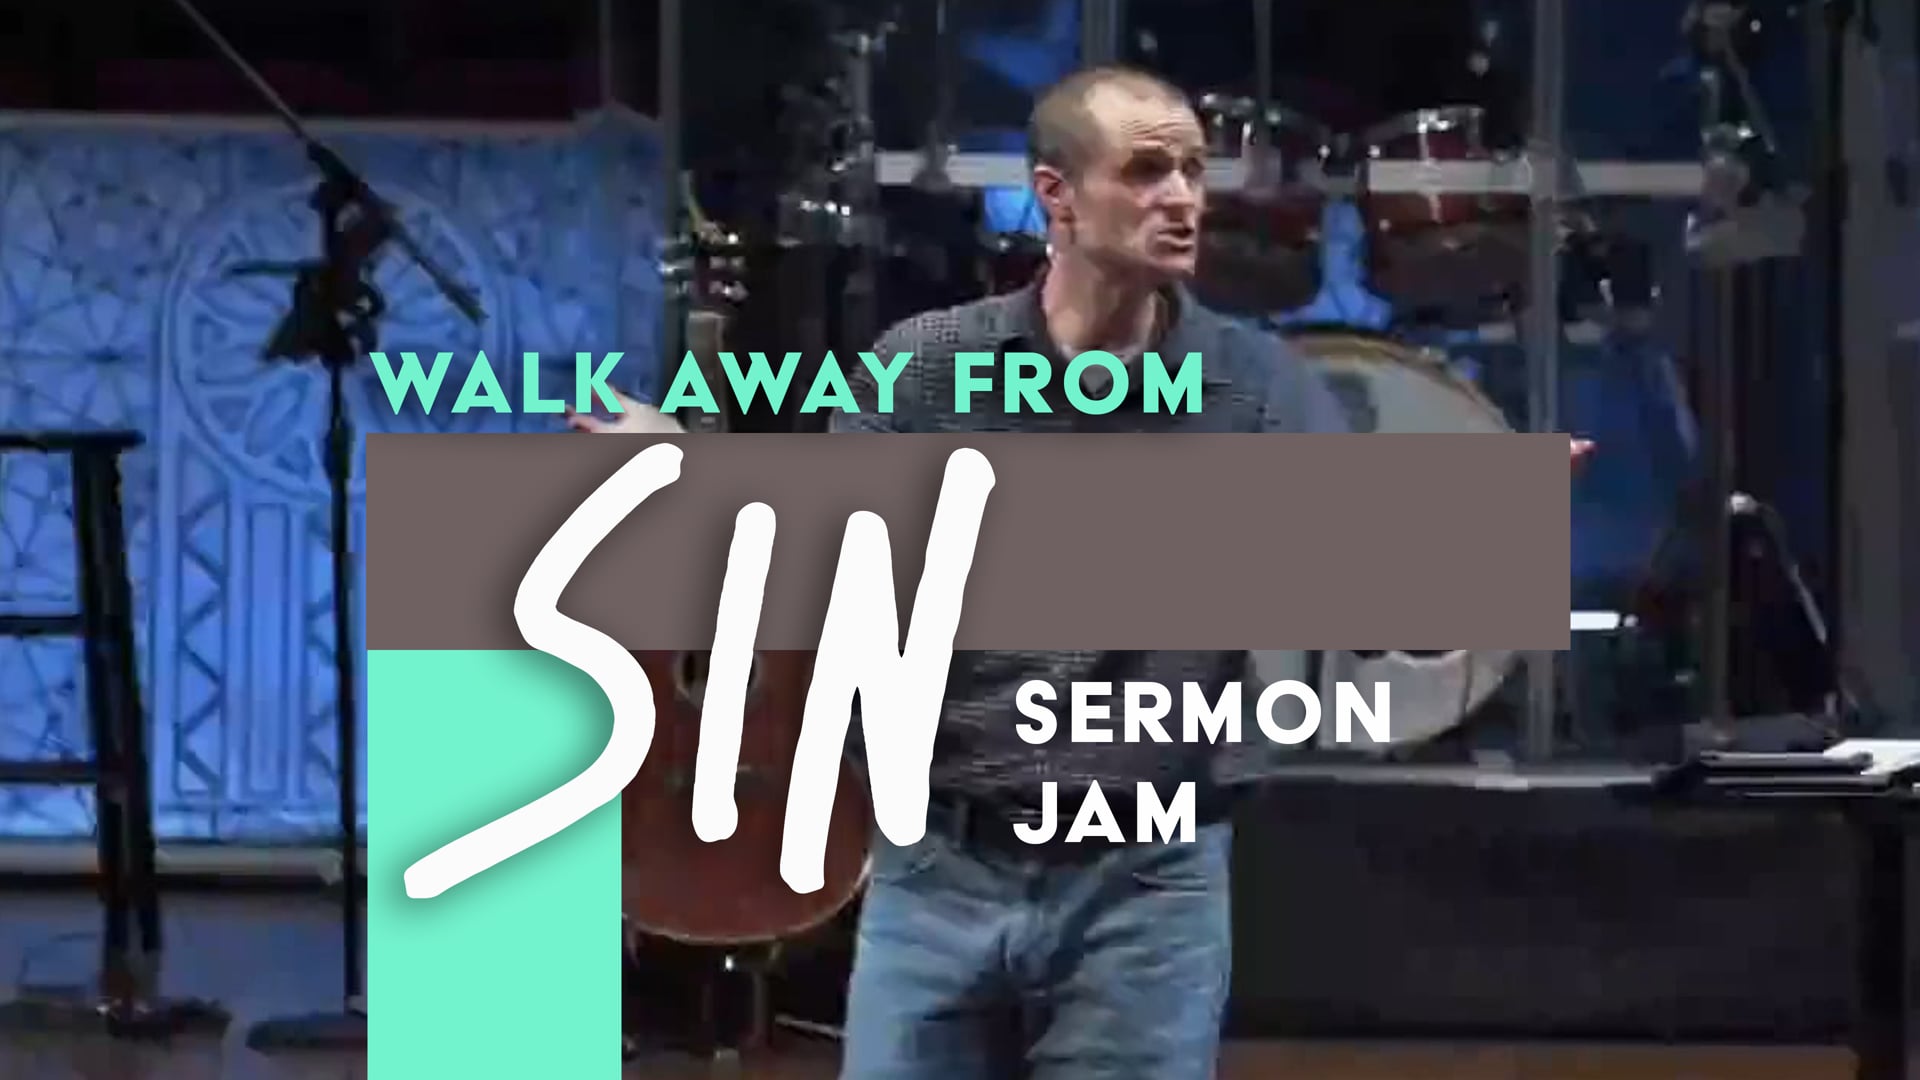 Walk Away From Sin Sermon Jam